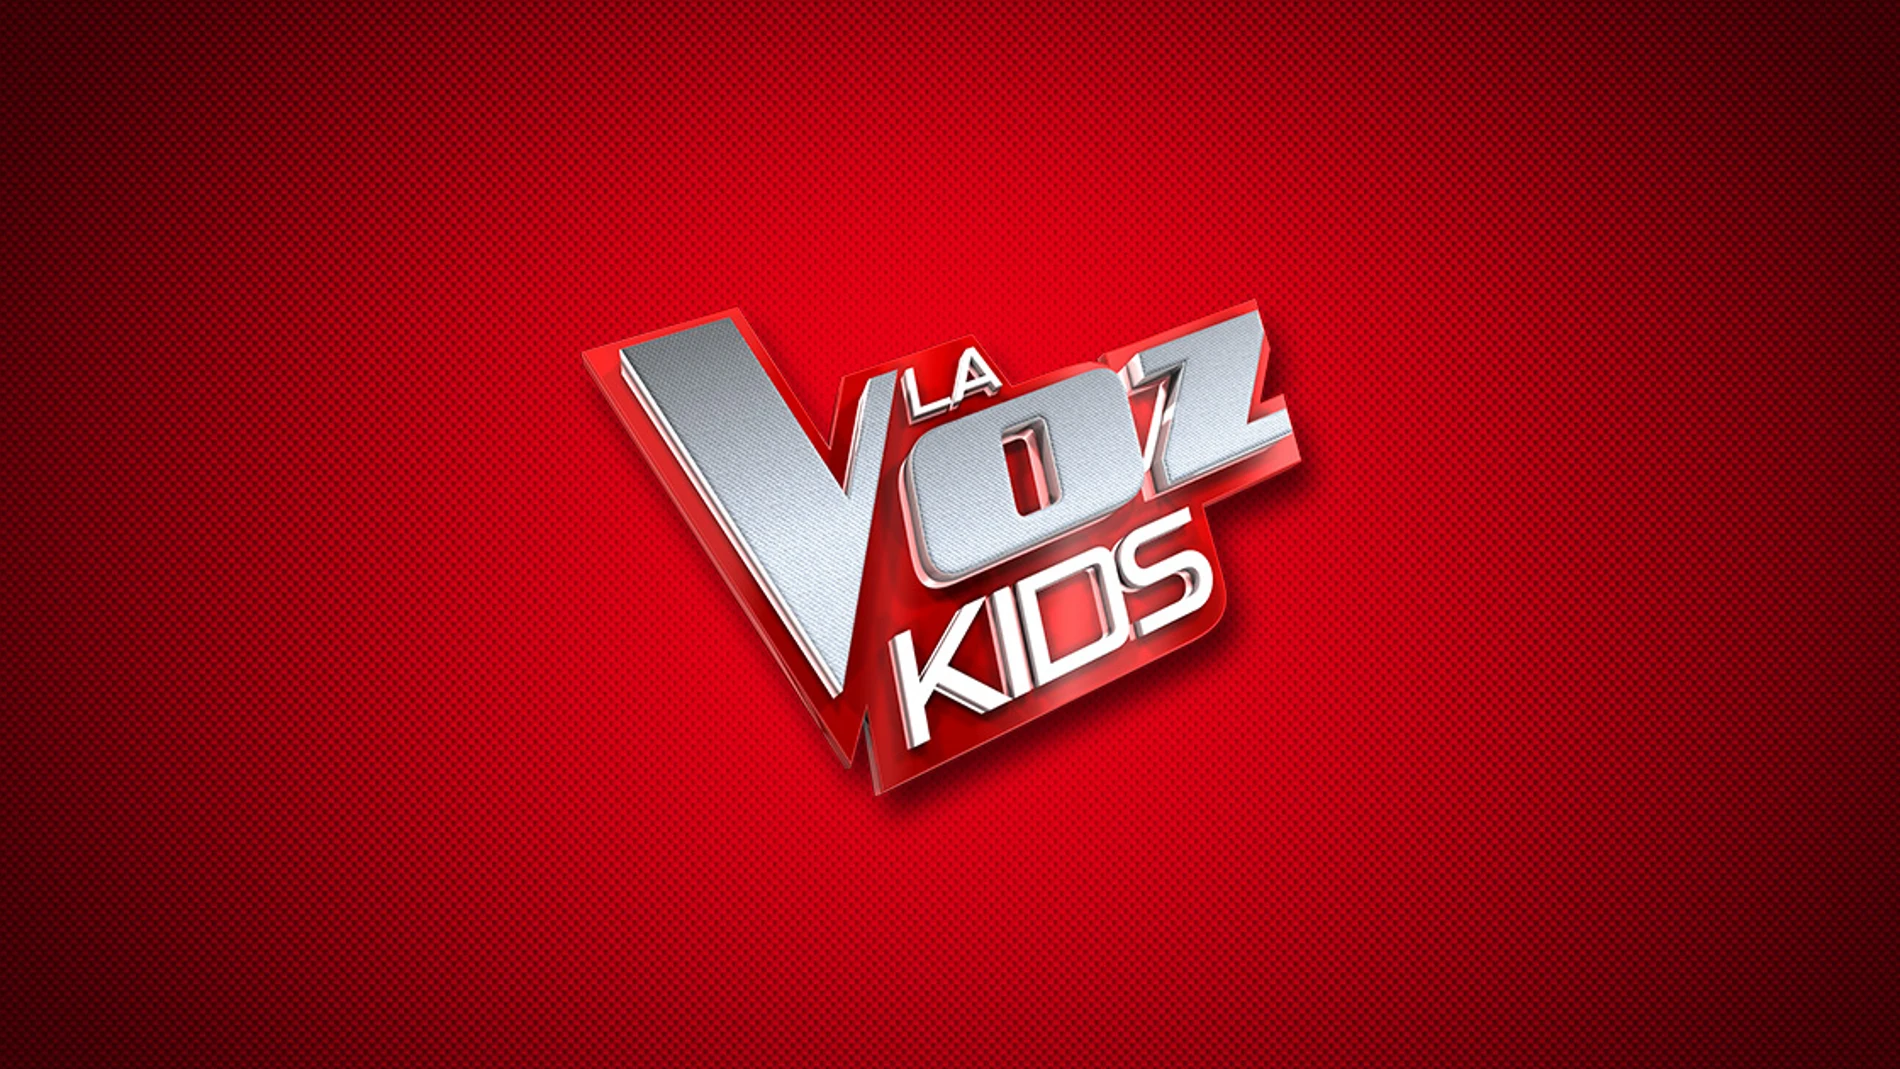 Apúntate al casting de 'La Voz Kids'